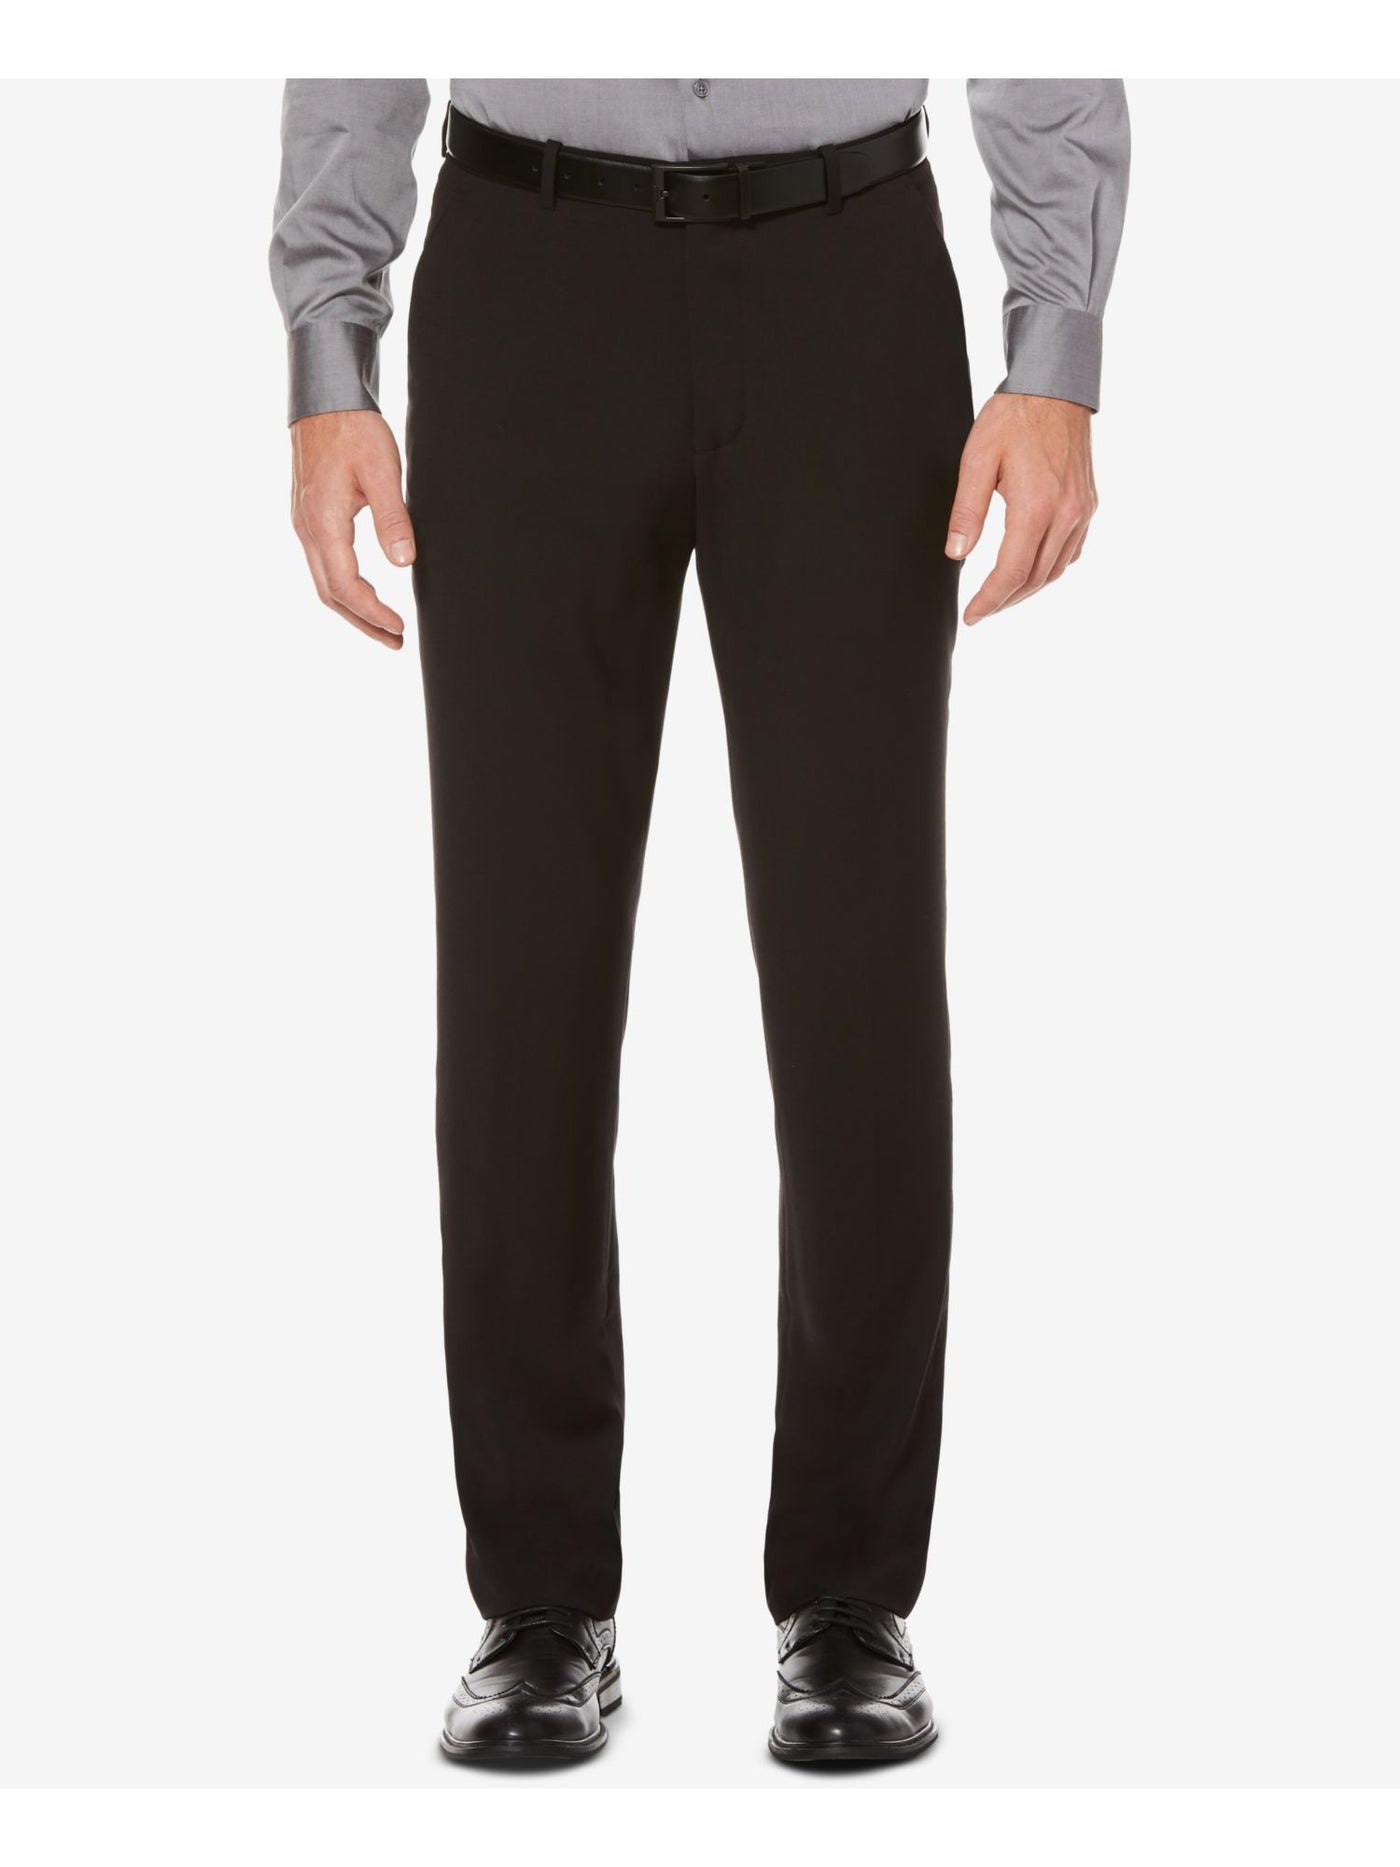 PERRY ELLIS PORTFOLIO Mens Black Flat Front, Slim Fit Wrinkle Resistant Pants 34W/ 32L